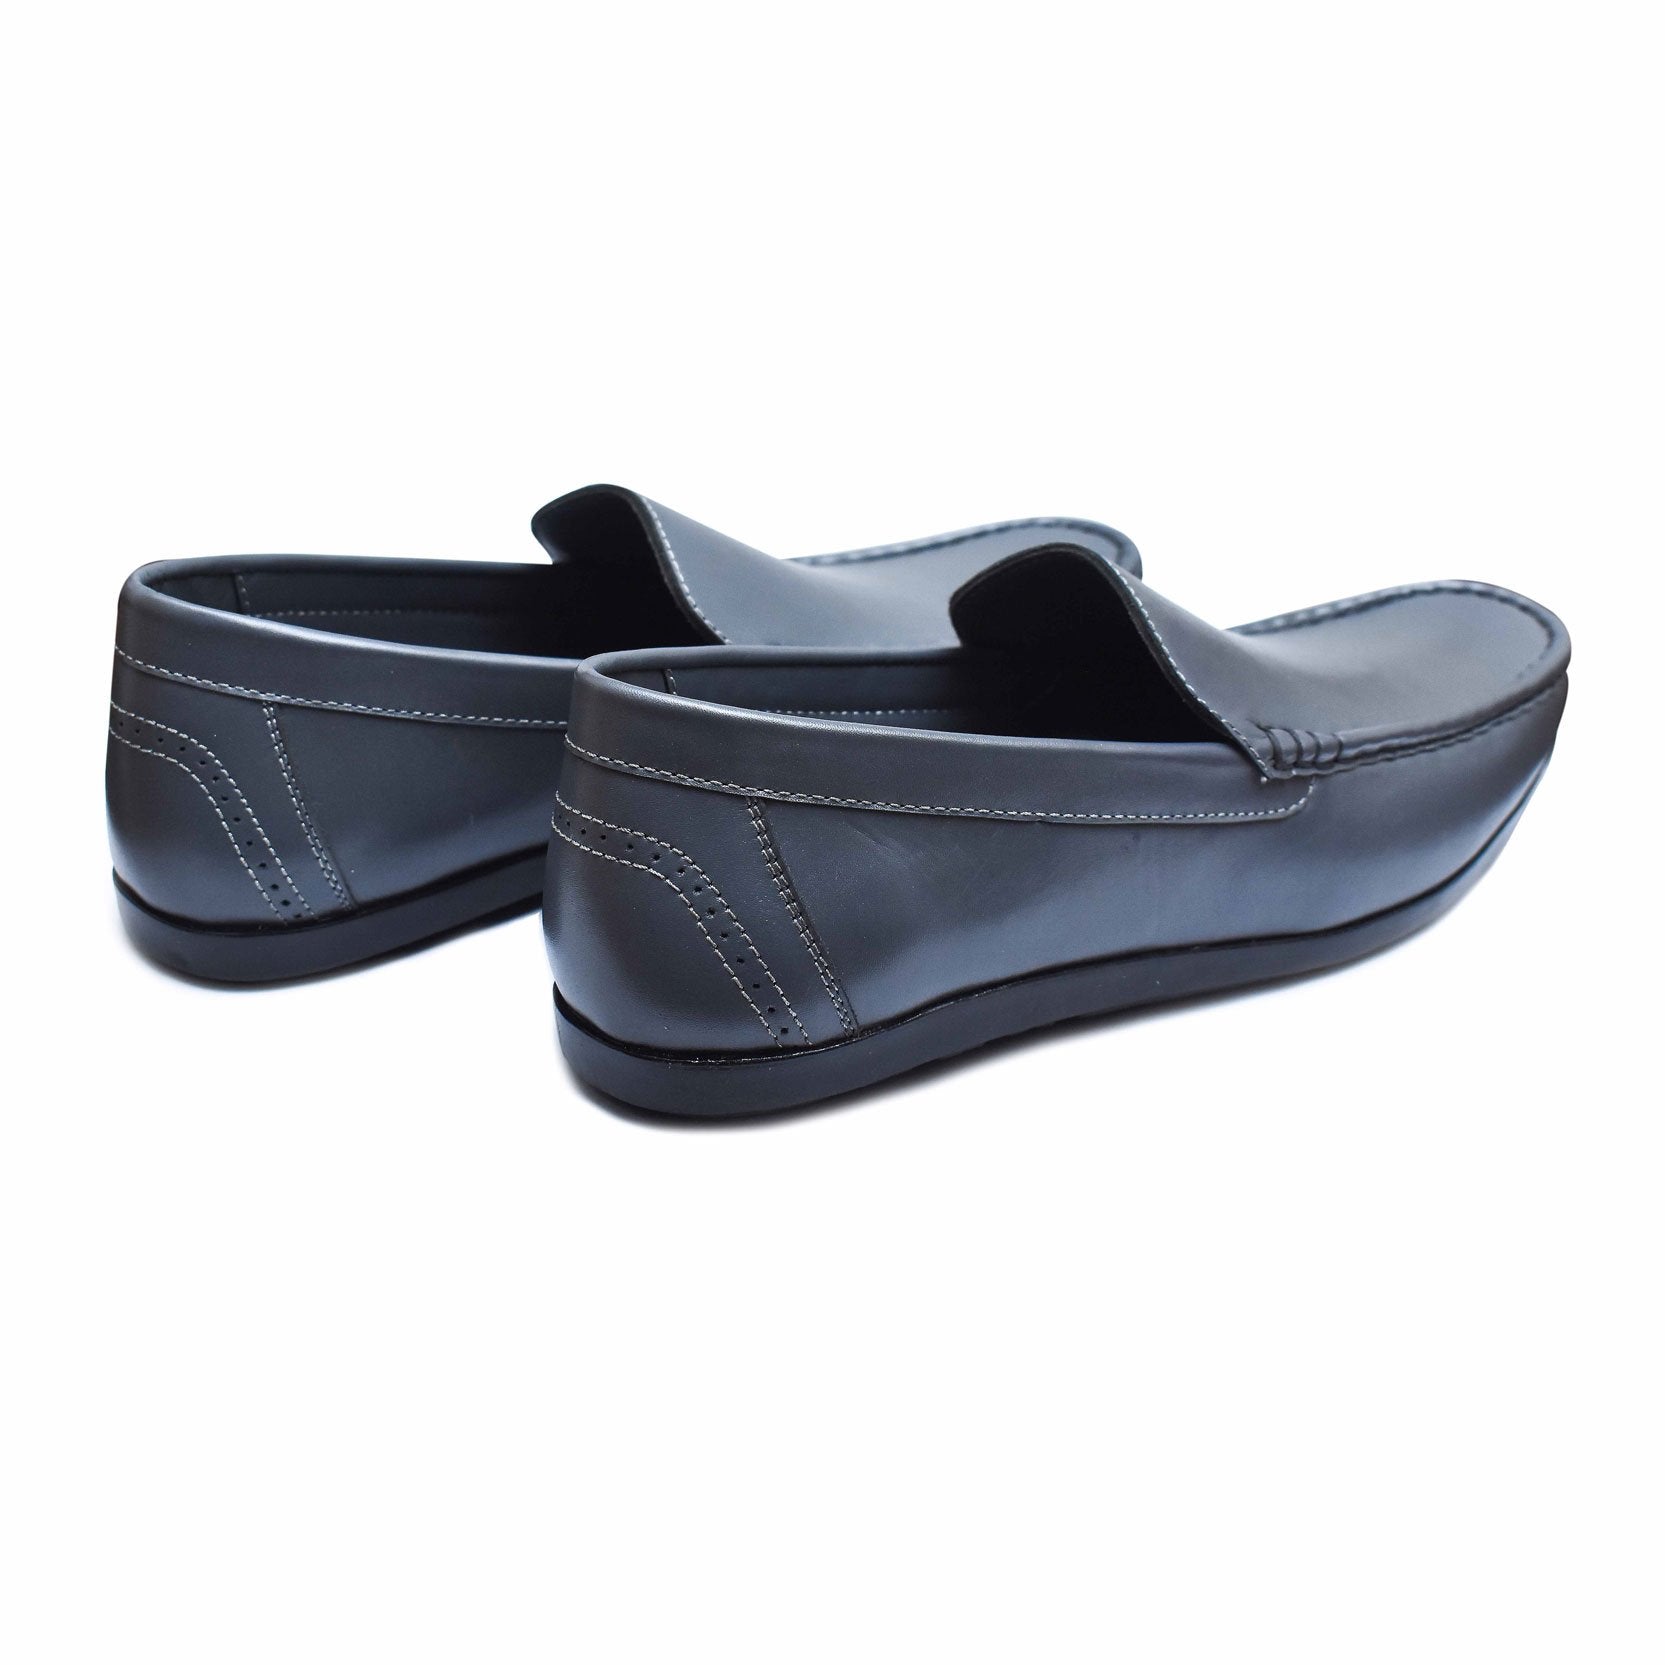 Zays Premium Leather Loafer Shoe For Men (Navy Grey) - ZAYSFS109